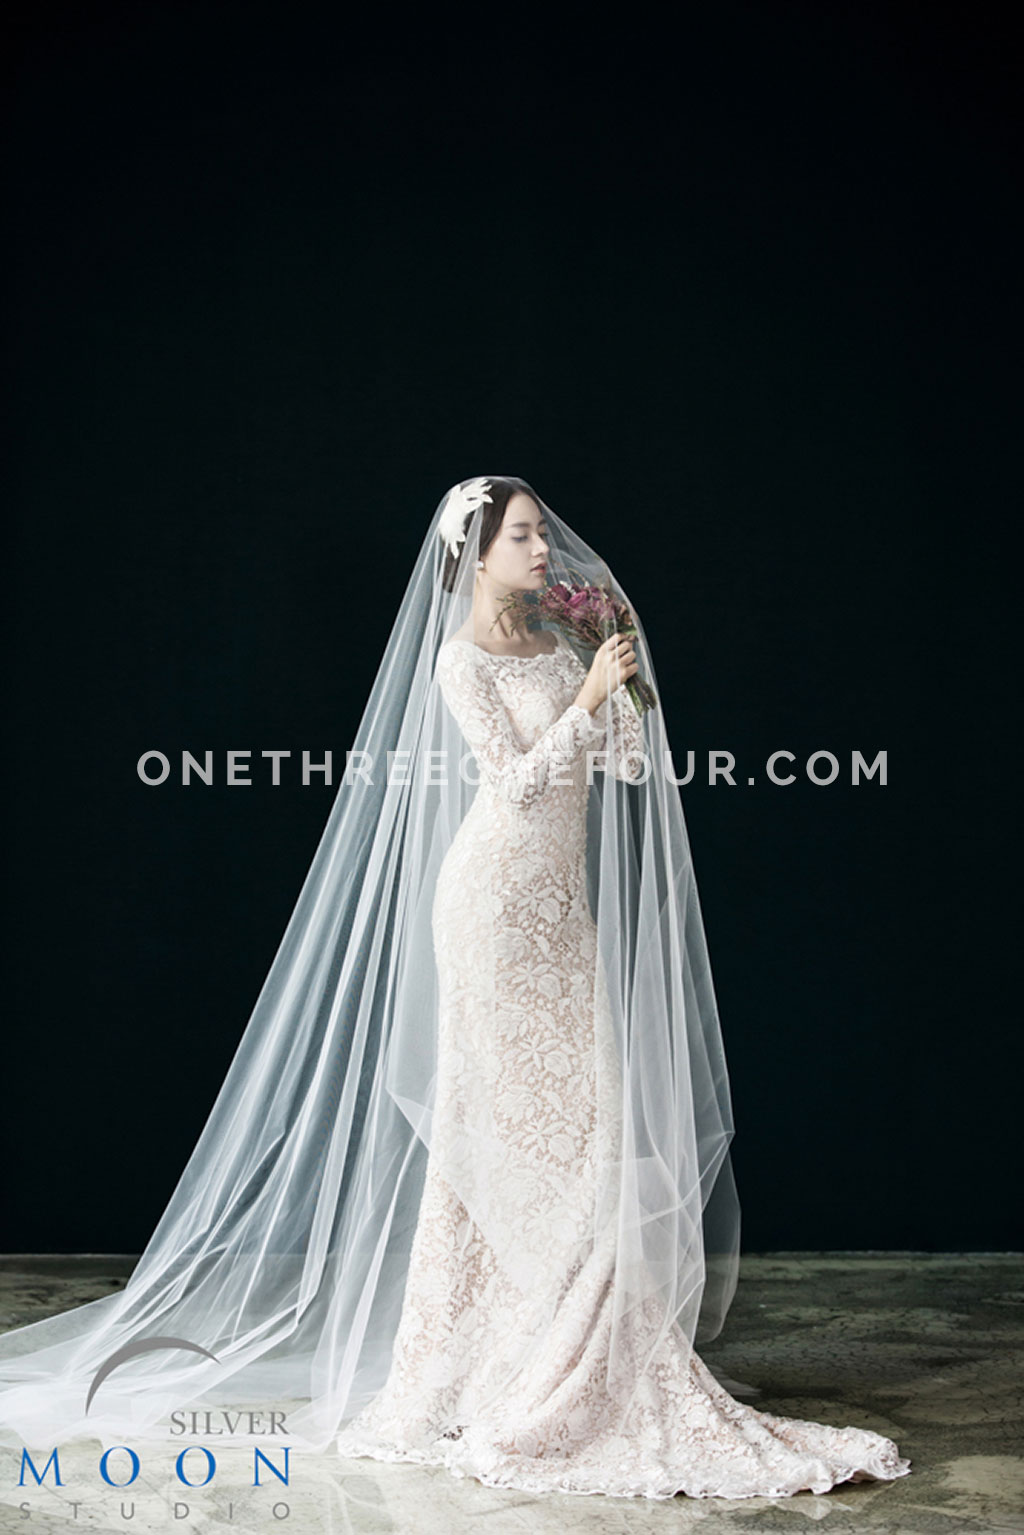 Korean Studio Pre-Wedding Photography: Elegance by Silver Moon Studio on OneThreeOneFour 4